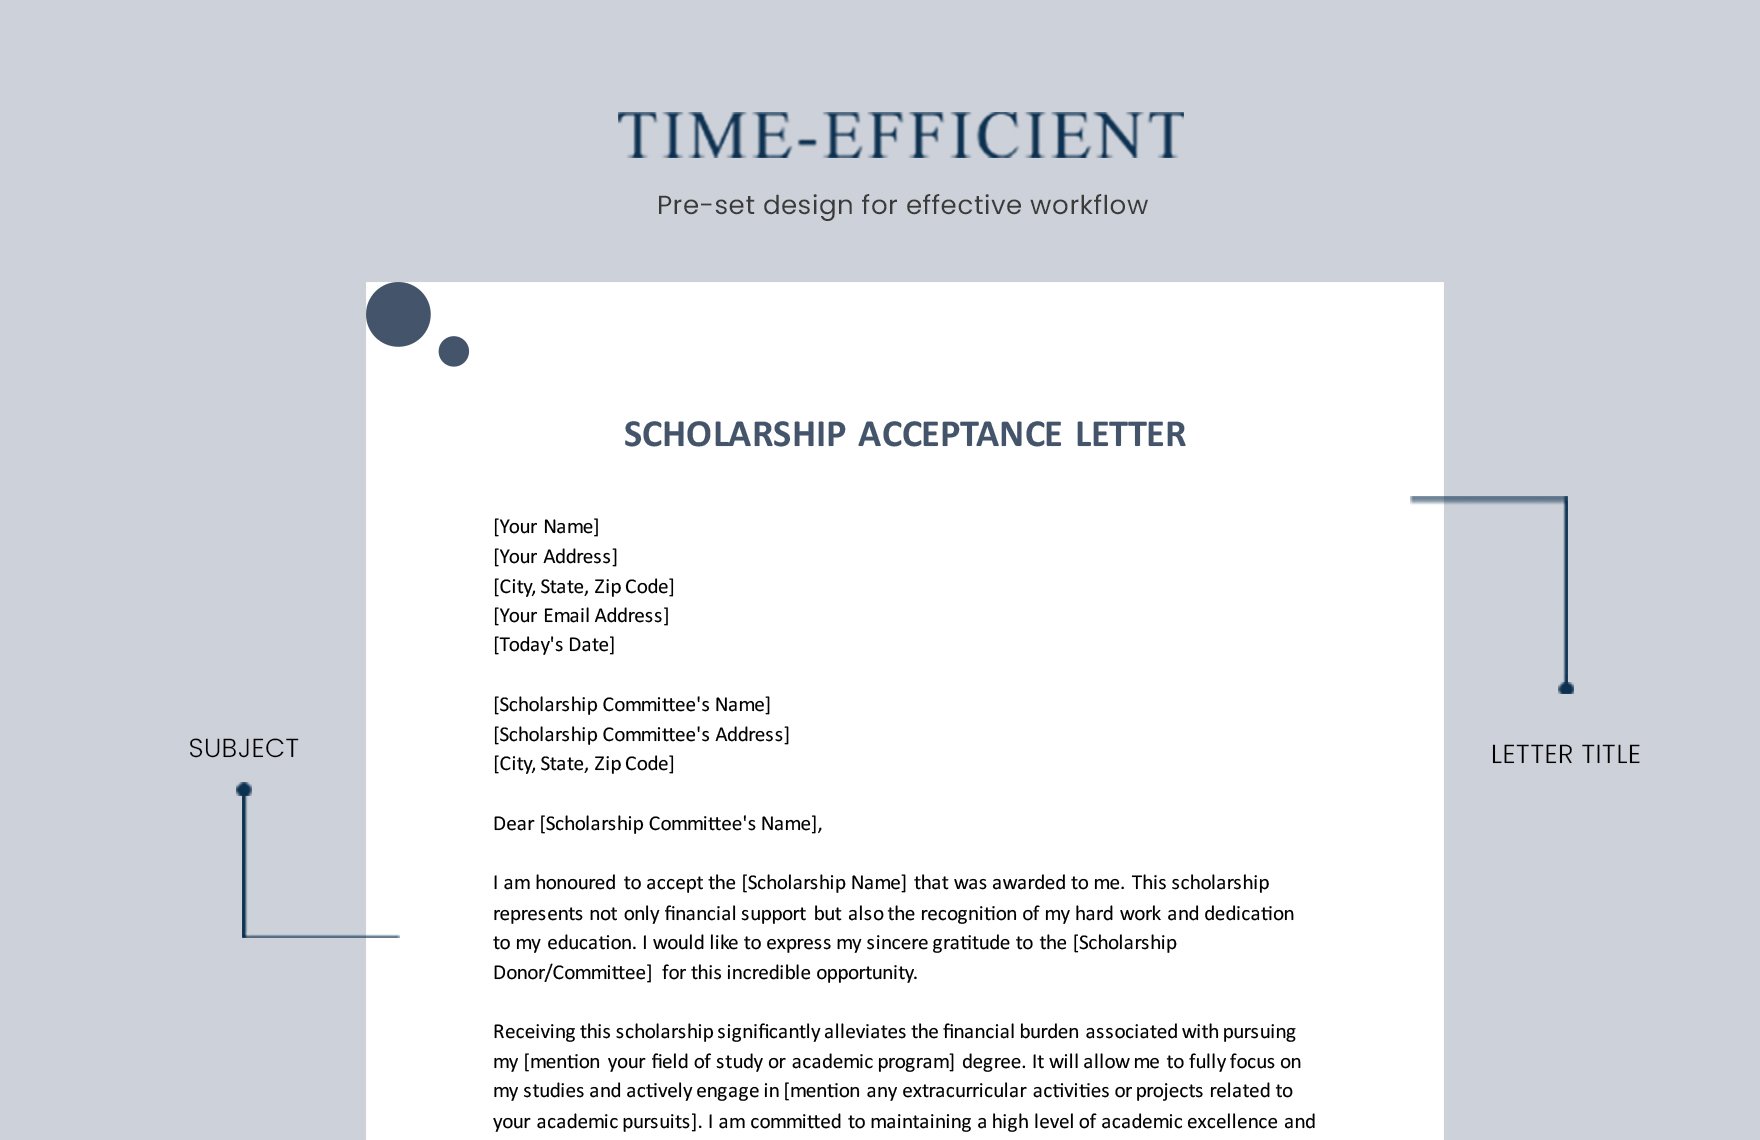 Scholarship Acceptance Letter